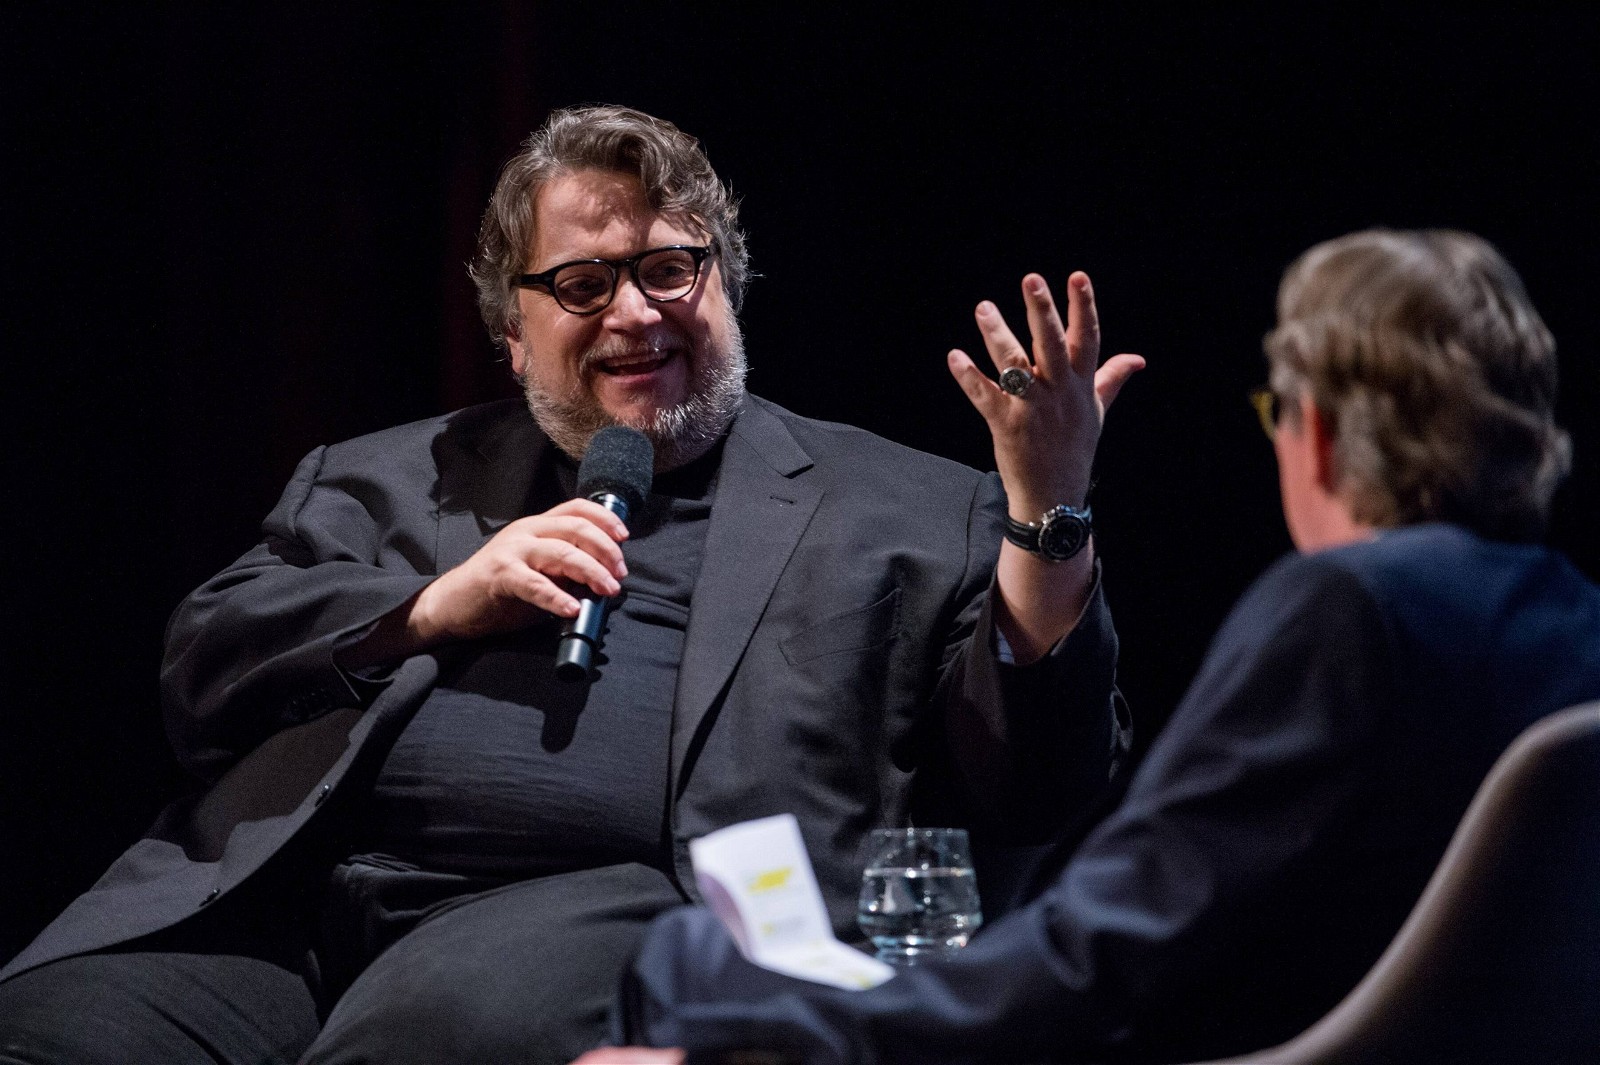 Guillermo Del Toro dismisses art created by AI